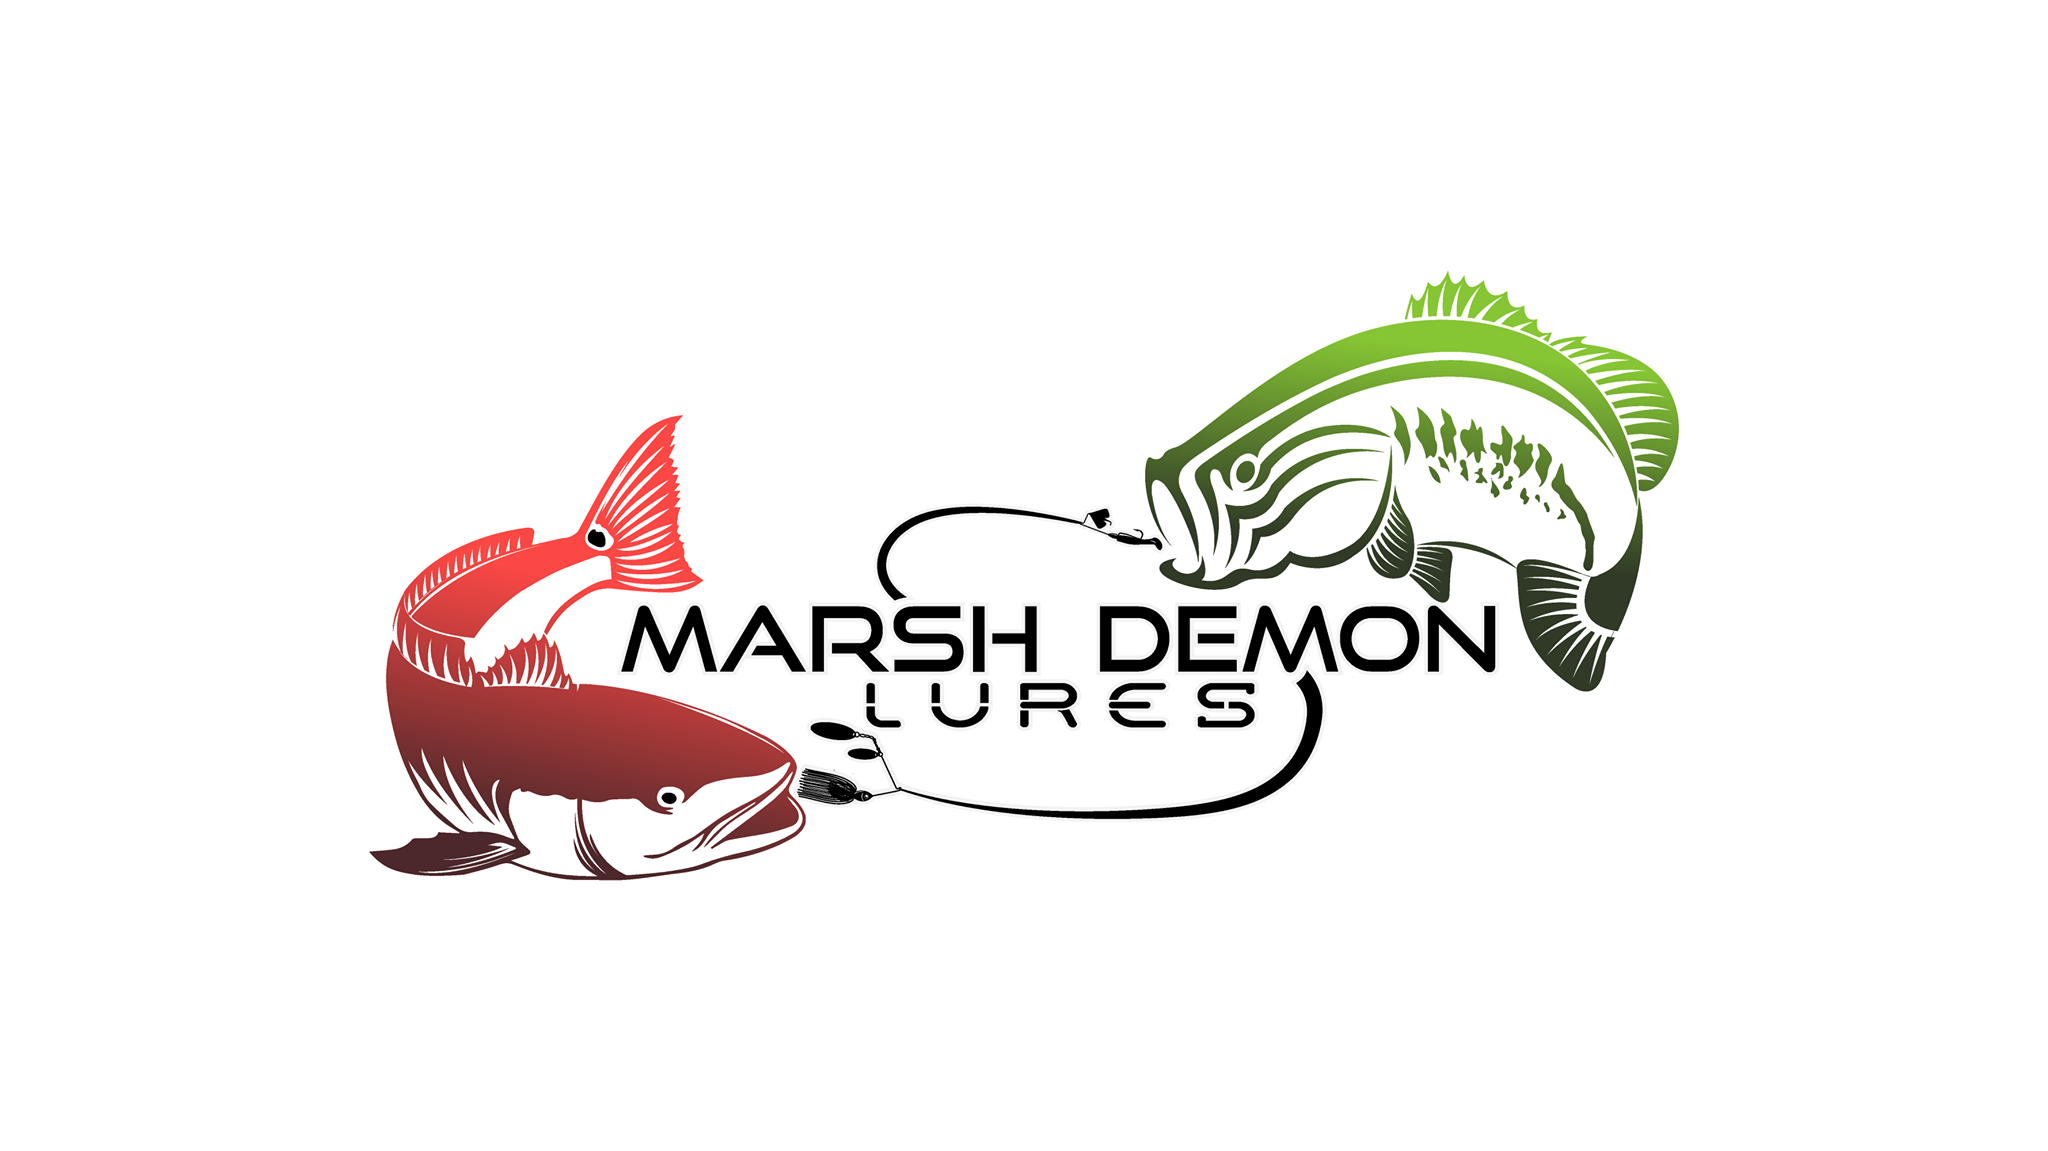 872-marsh-demon-lures-16900708189923.png